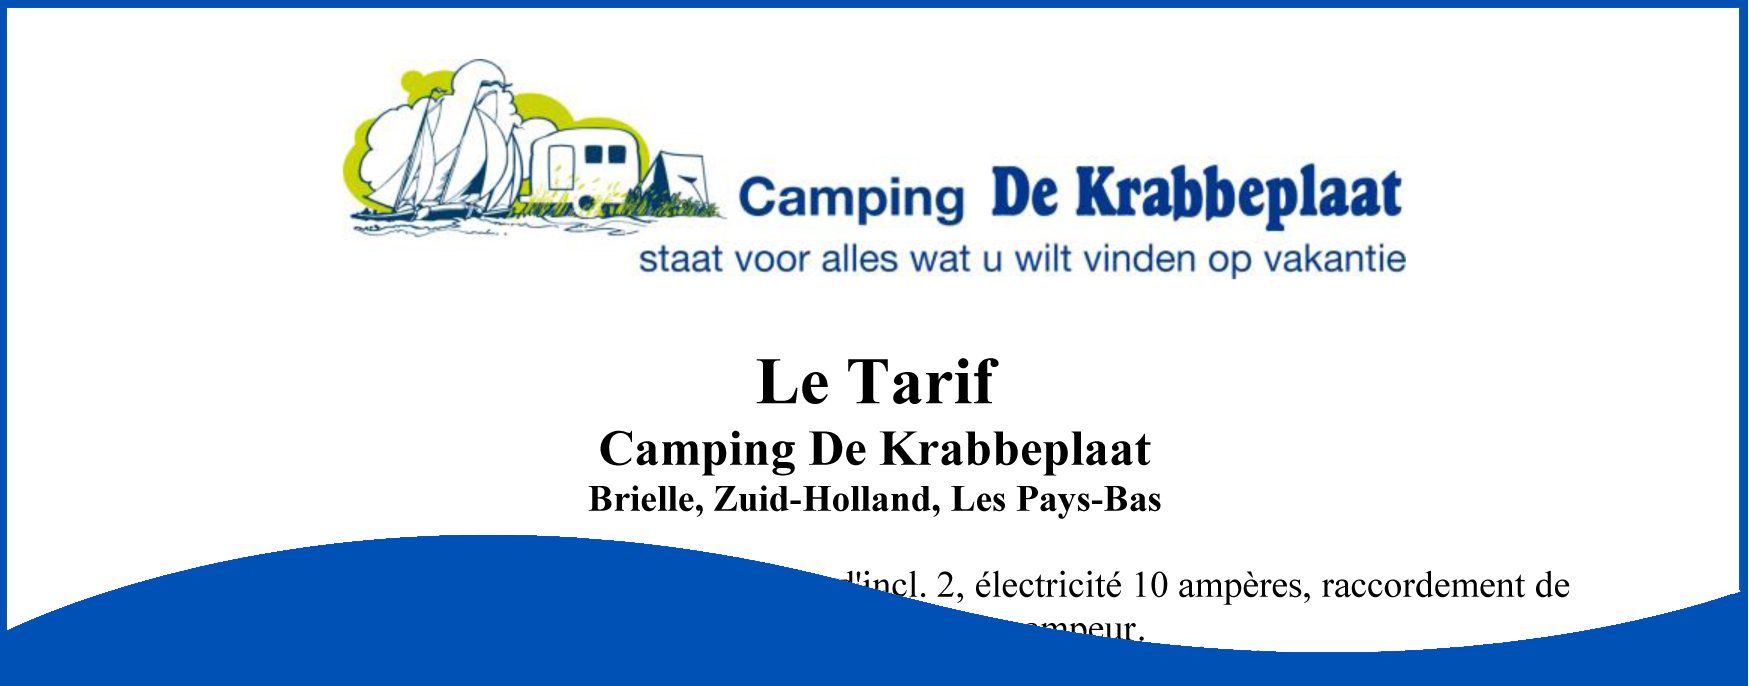 Les Tarifs Camping De Krabbeplaat